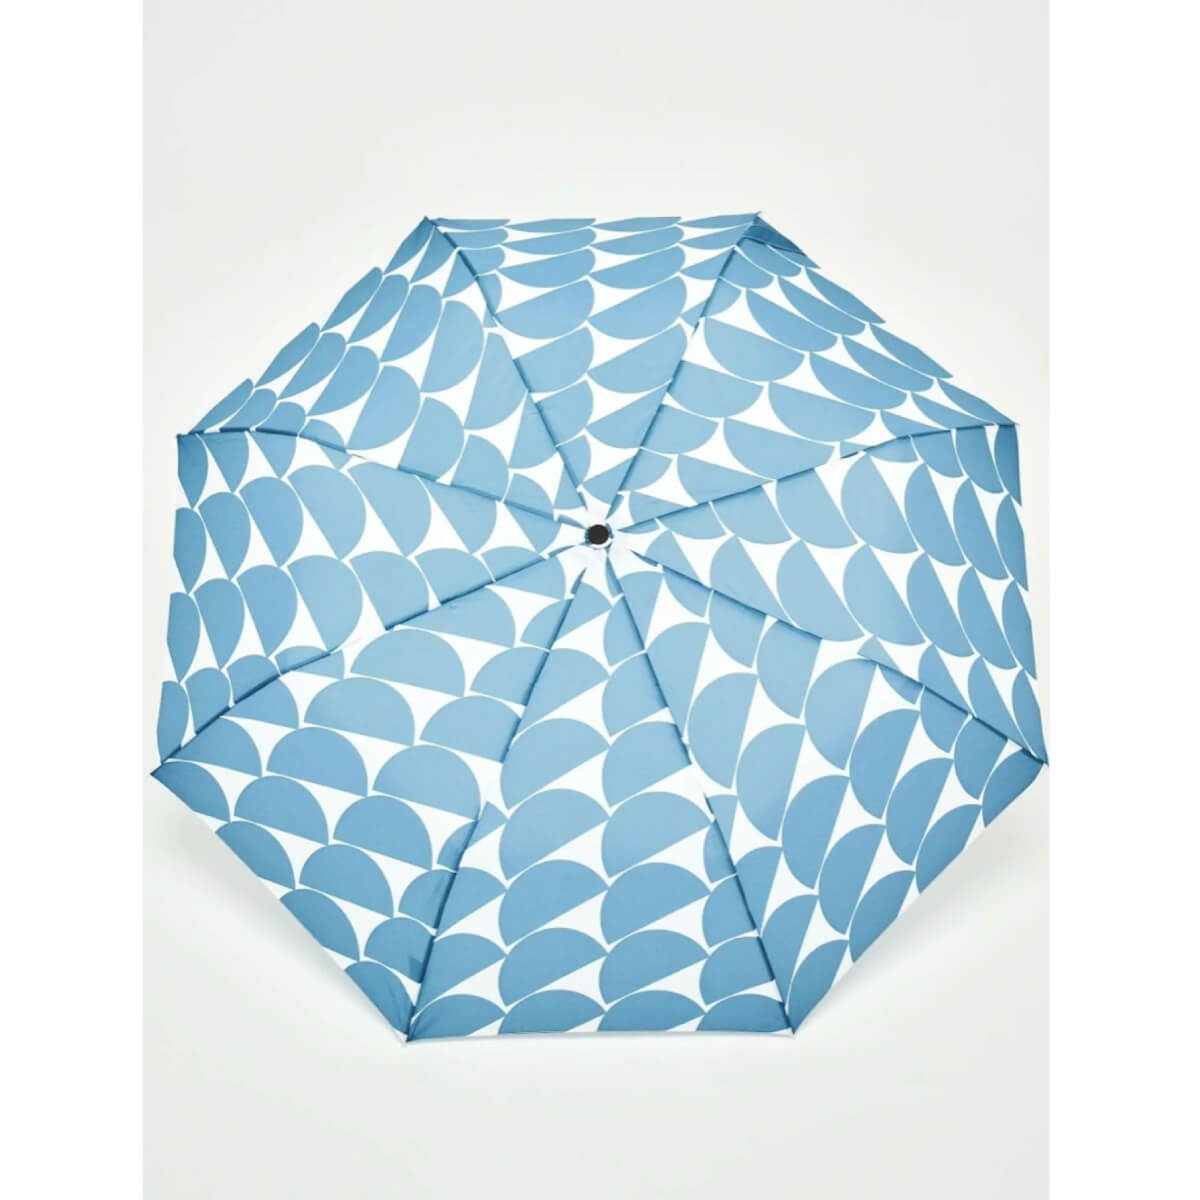 Denim Moon Compact Duckhead Umbrella front | MILK MONEY milkmoney.co | white elephant gift ideas, gift, mother's day gift ideas, white elephant gift, gift shops near me, cute umbrella